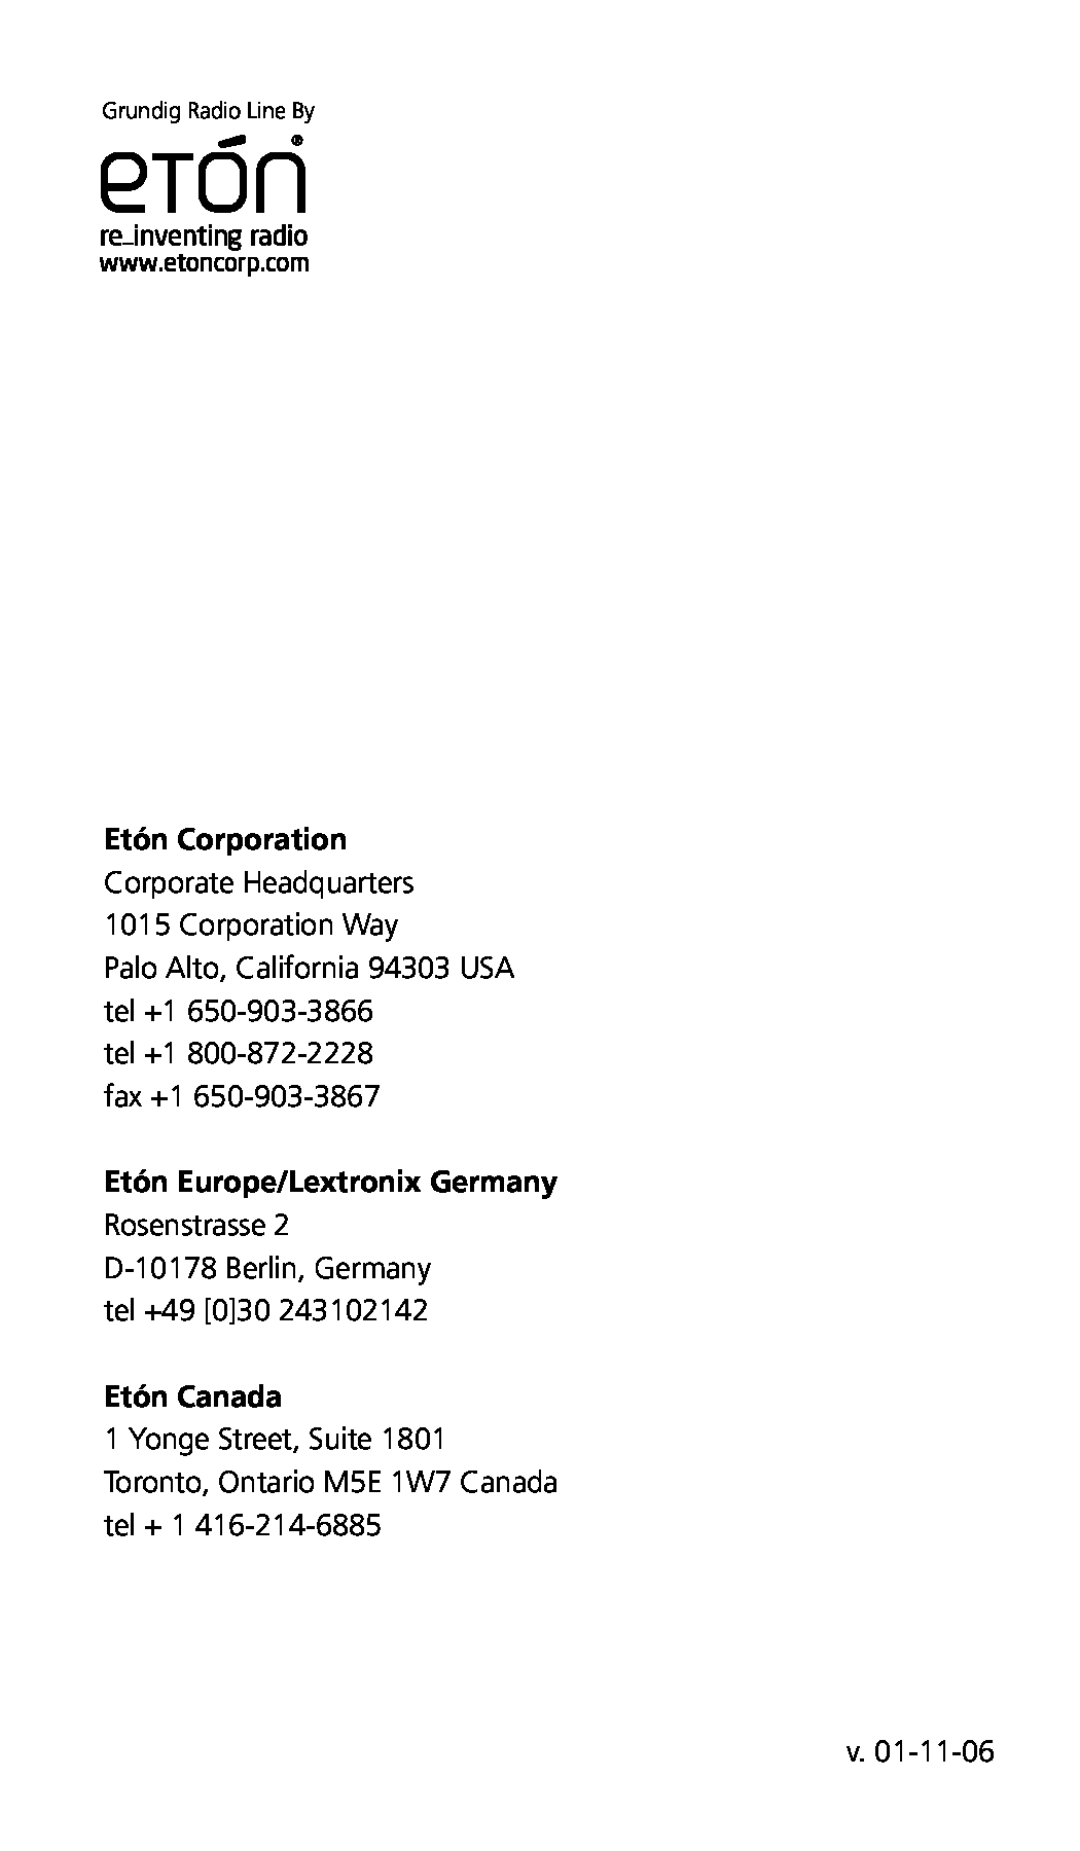 Eton G5 Etón Corporation, Corporate Headquarters 1015 Corporation Way, Etón Europe/Lextronix Germany, Etón Canada 